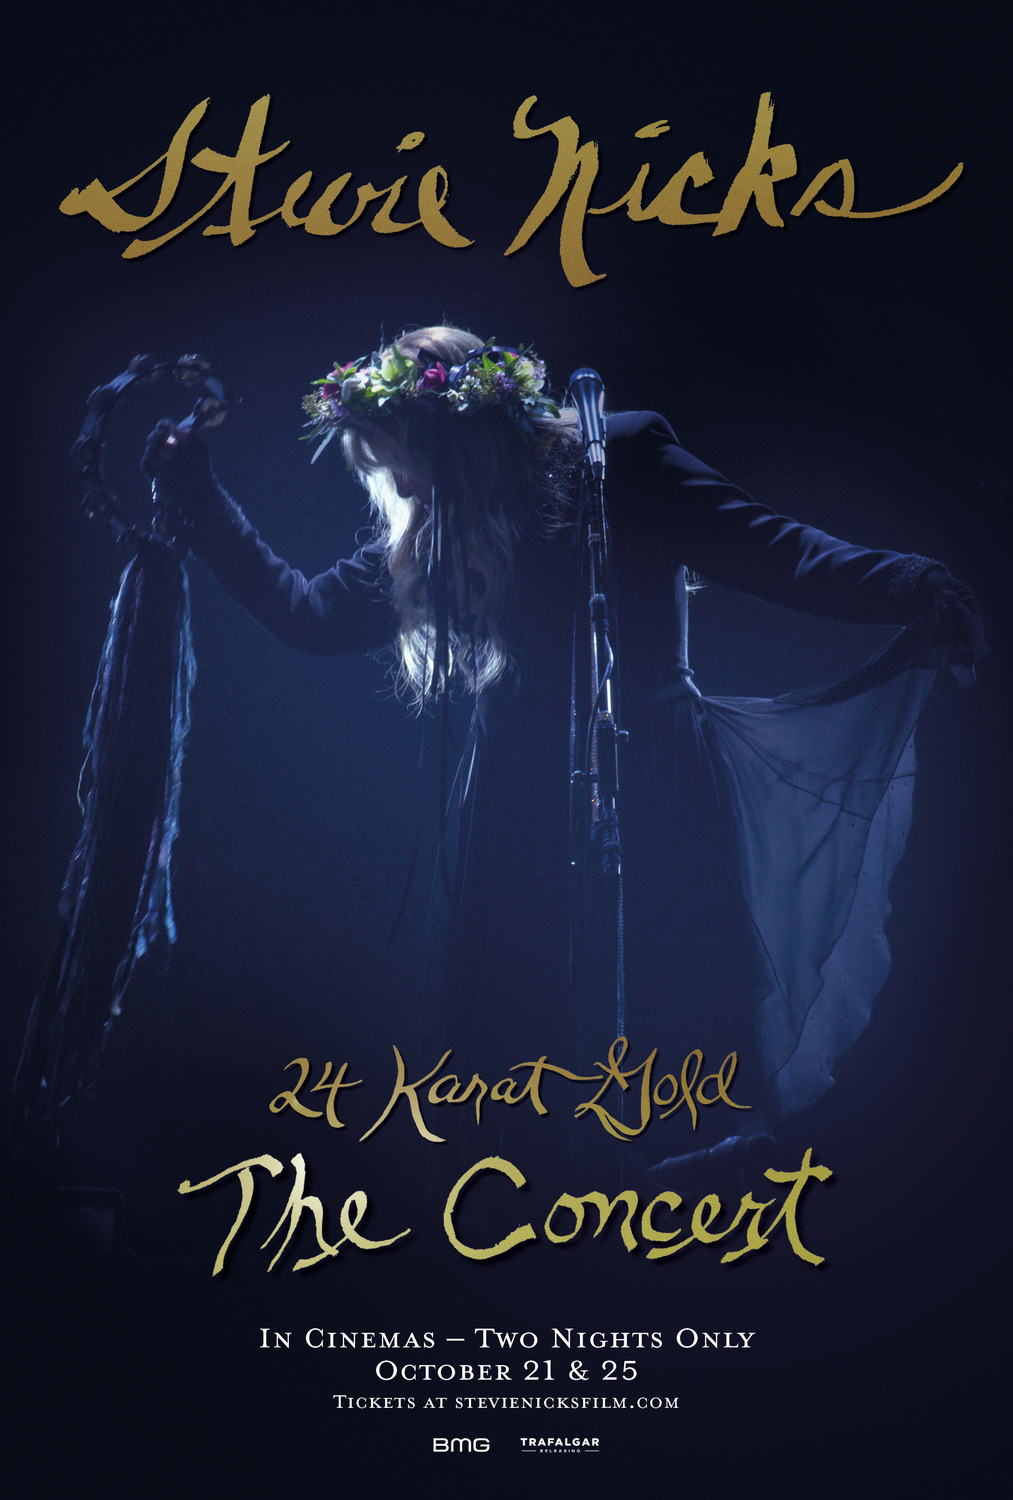 Extra Large Movie Poster Image for Stevie Nicks 24 Karat Gold the Concert 